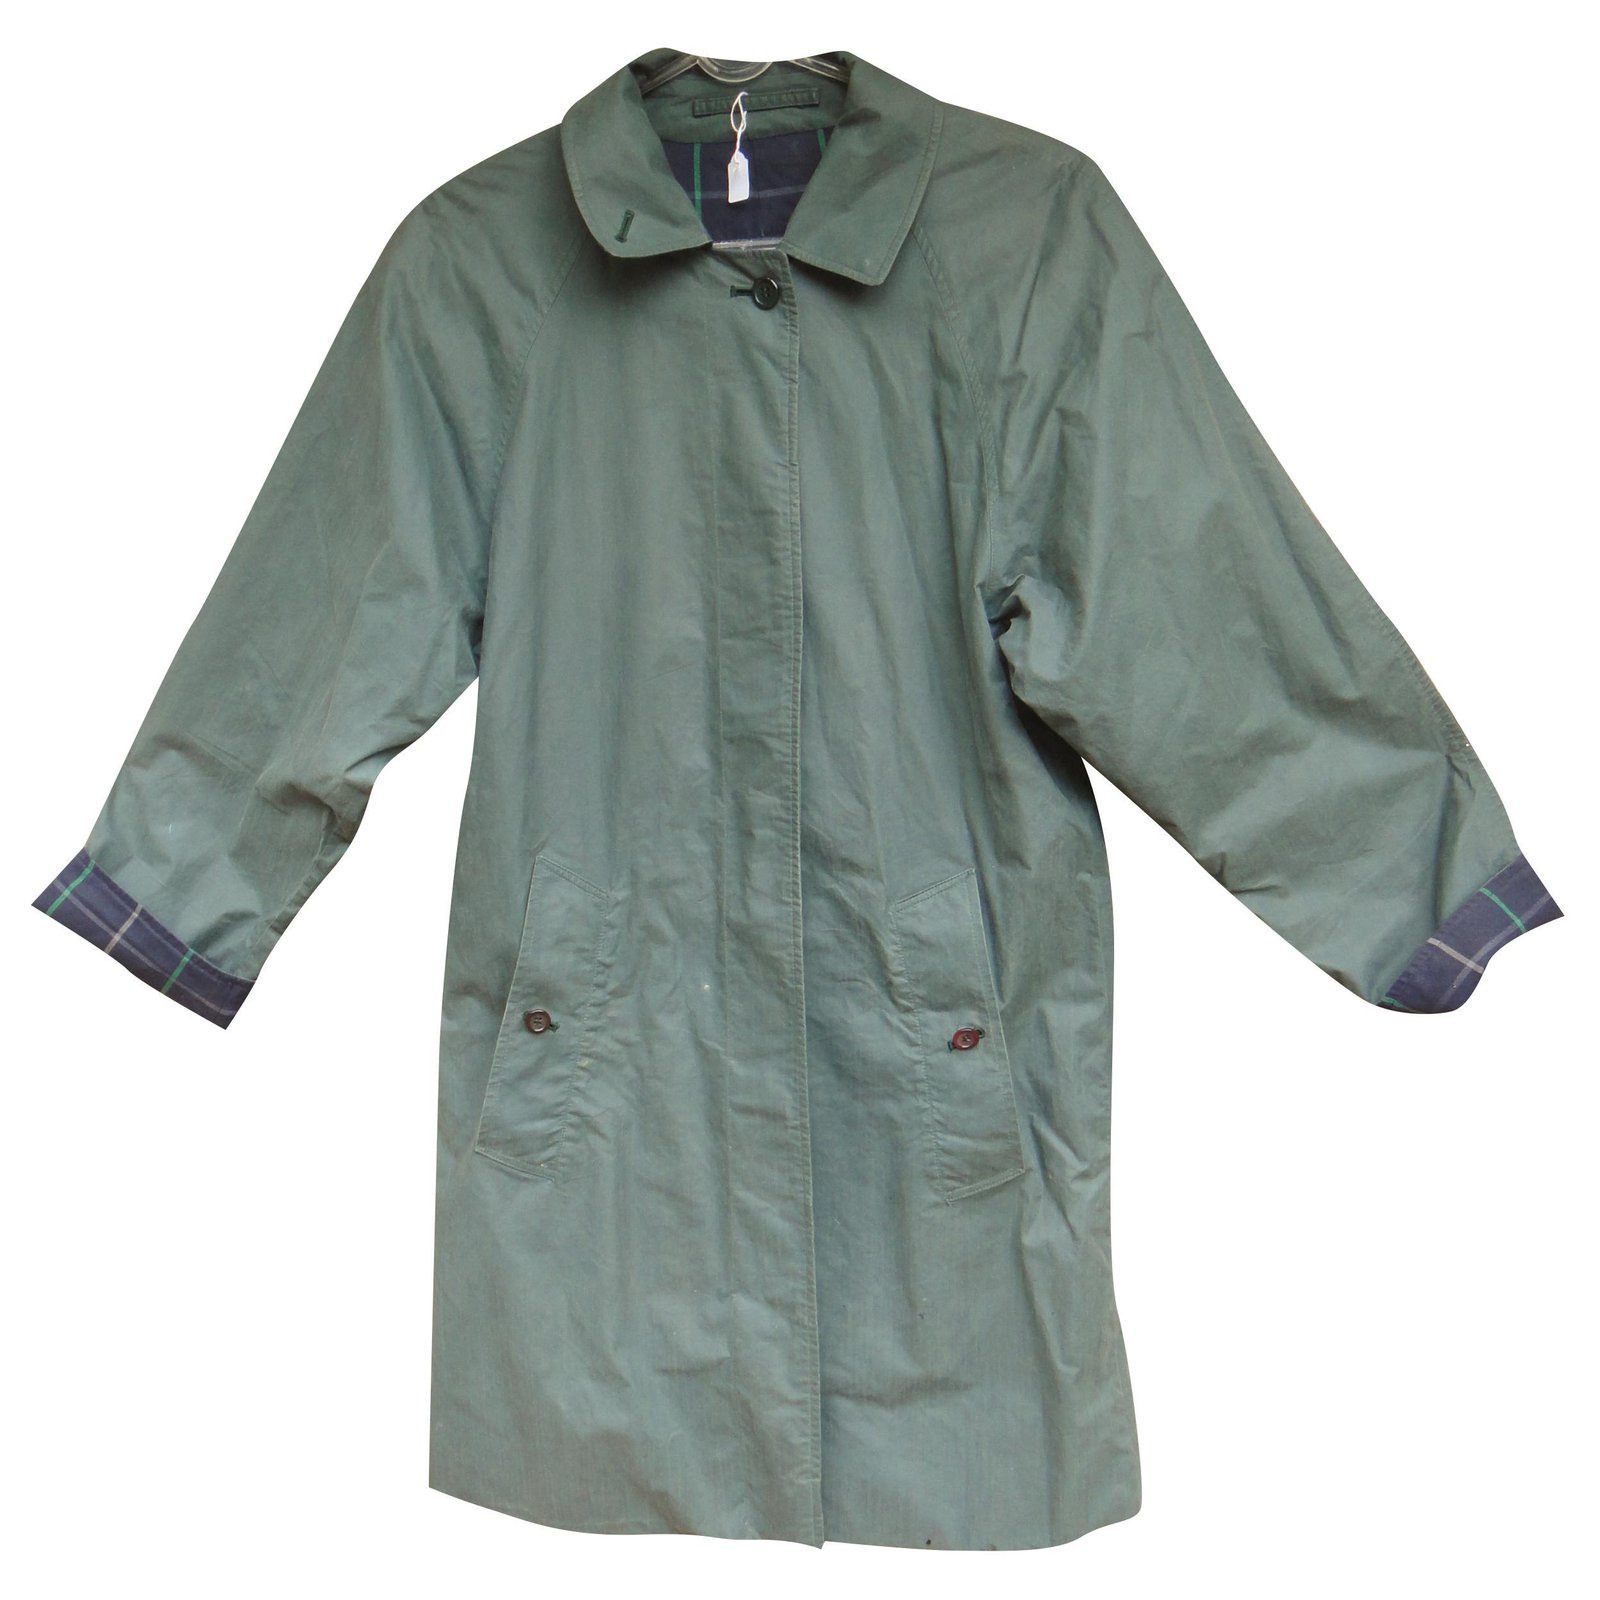 burberry green raincoat